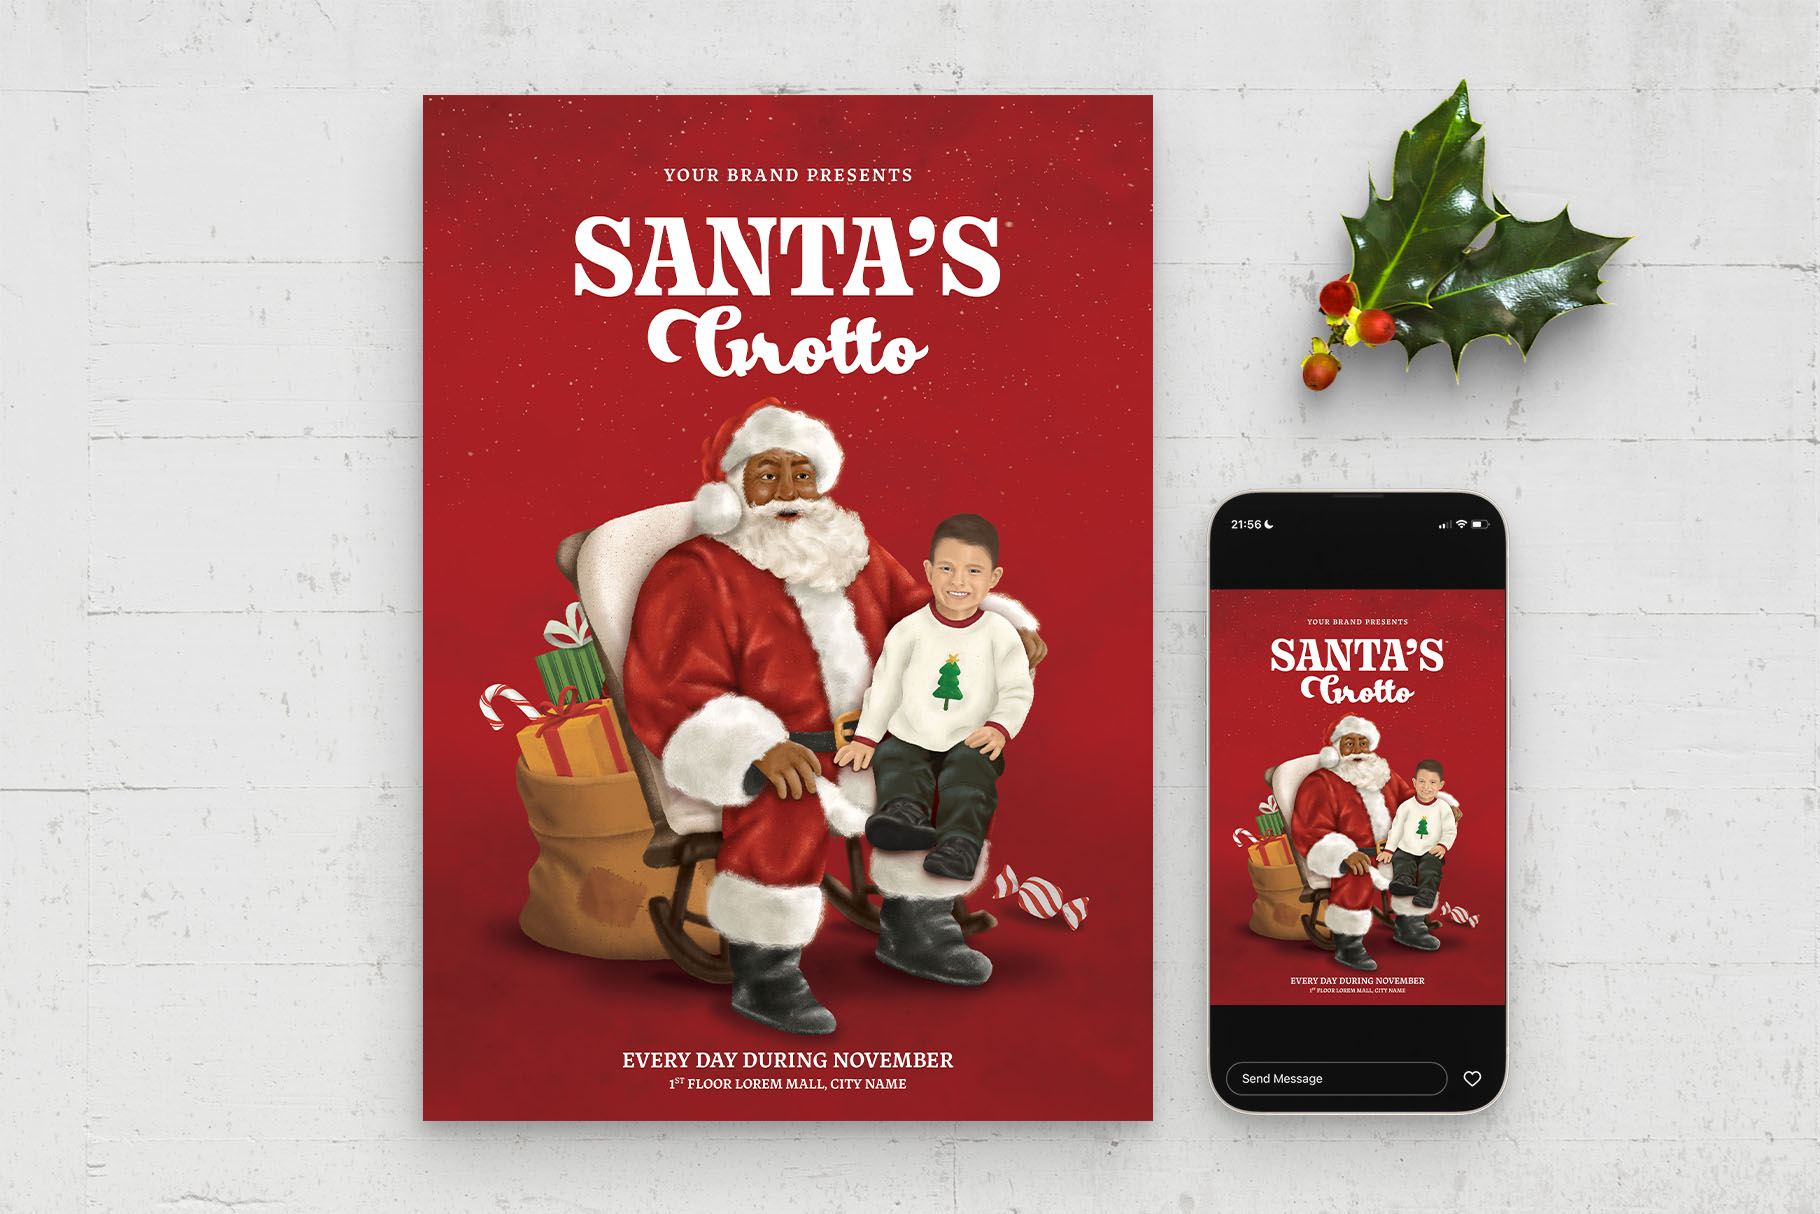 Santa & Child Clipart Illustration (PSD, PNG Format)